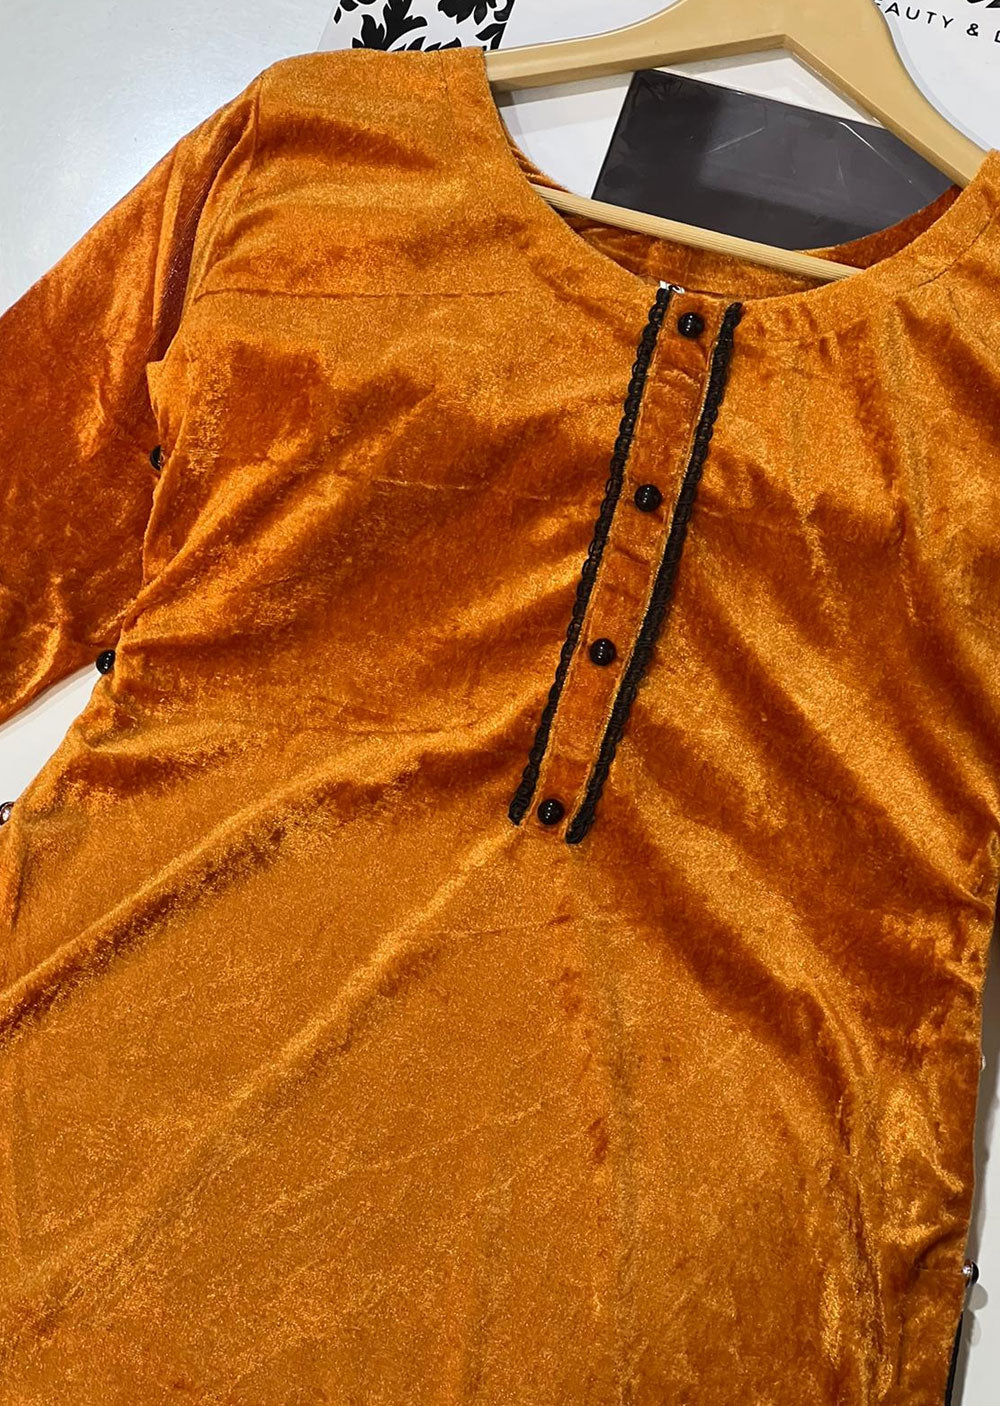 ASK402 Orange Readymade 2 Piece Velvet Suit - Memsaab Online